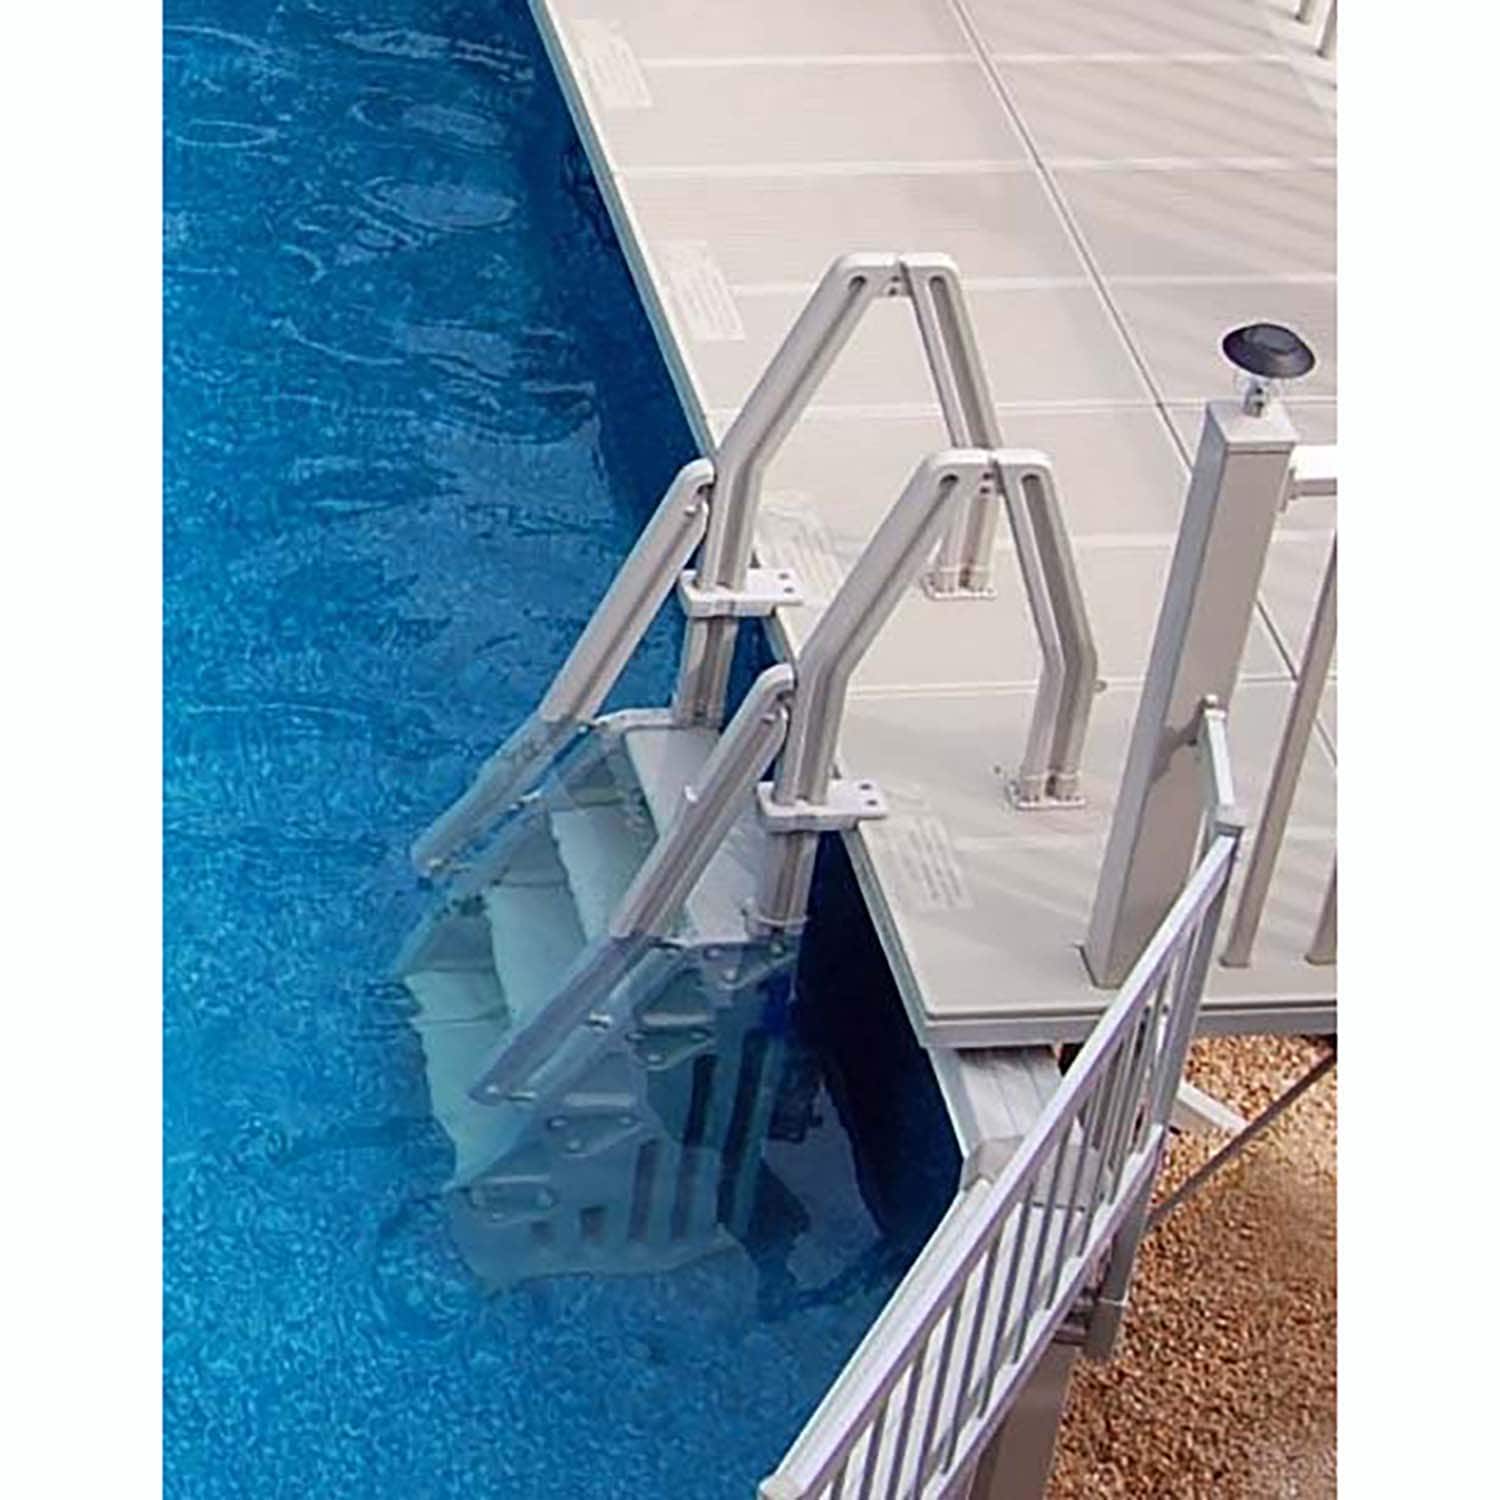 Confer Step-1 Above Ground Swimming Pool Ladder & Swimline 9x36 Ladder Mat